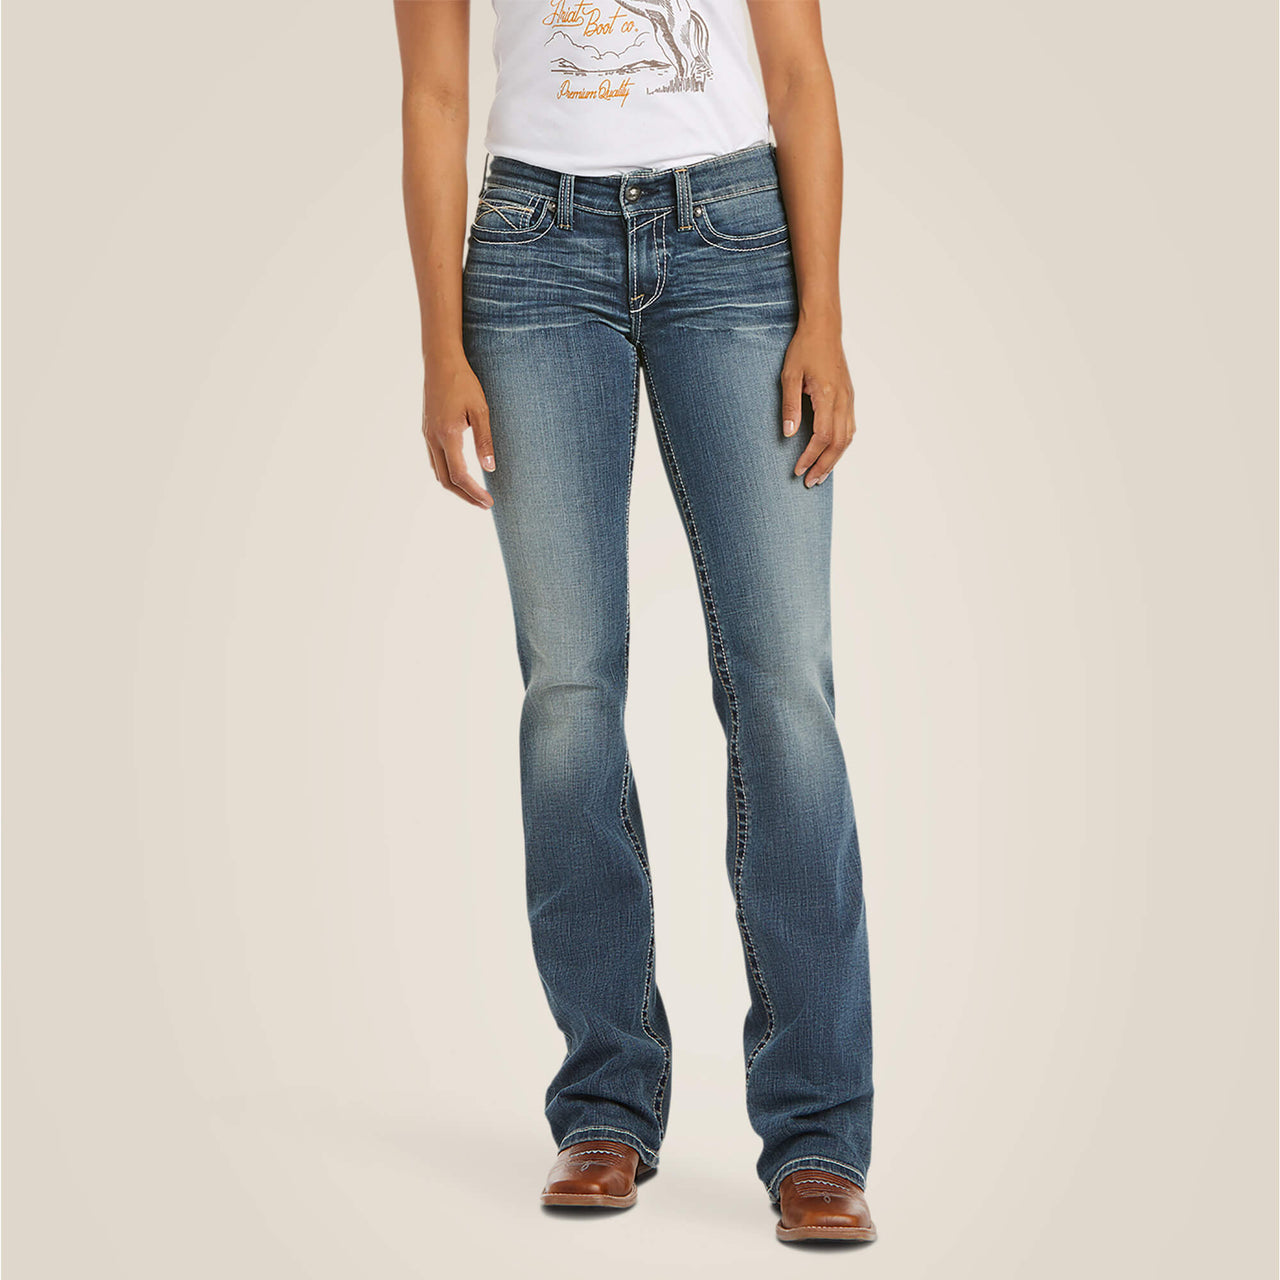 Ariat R.E.A.L Whipstitch Women's Jeans